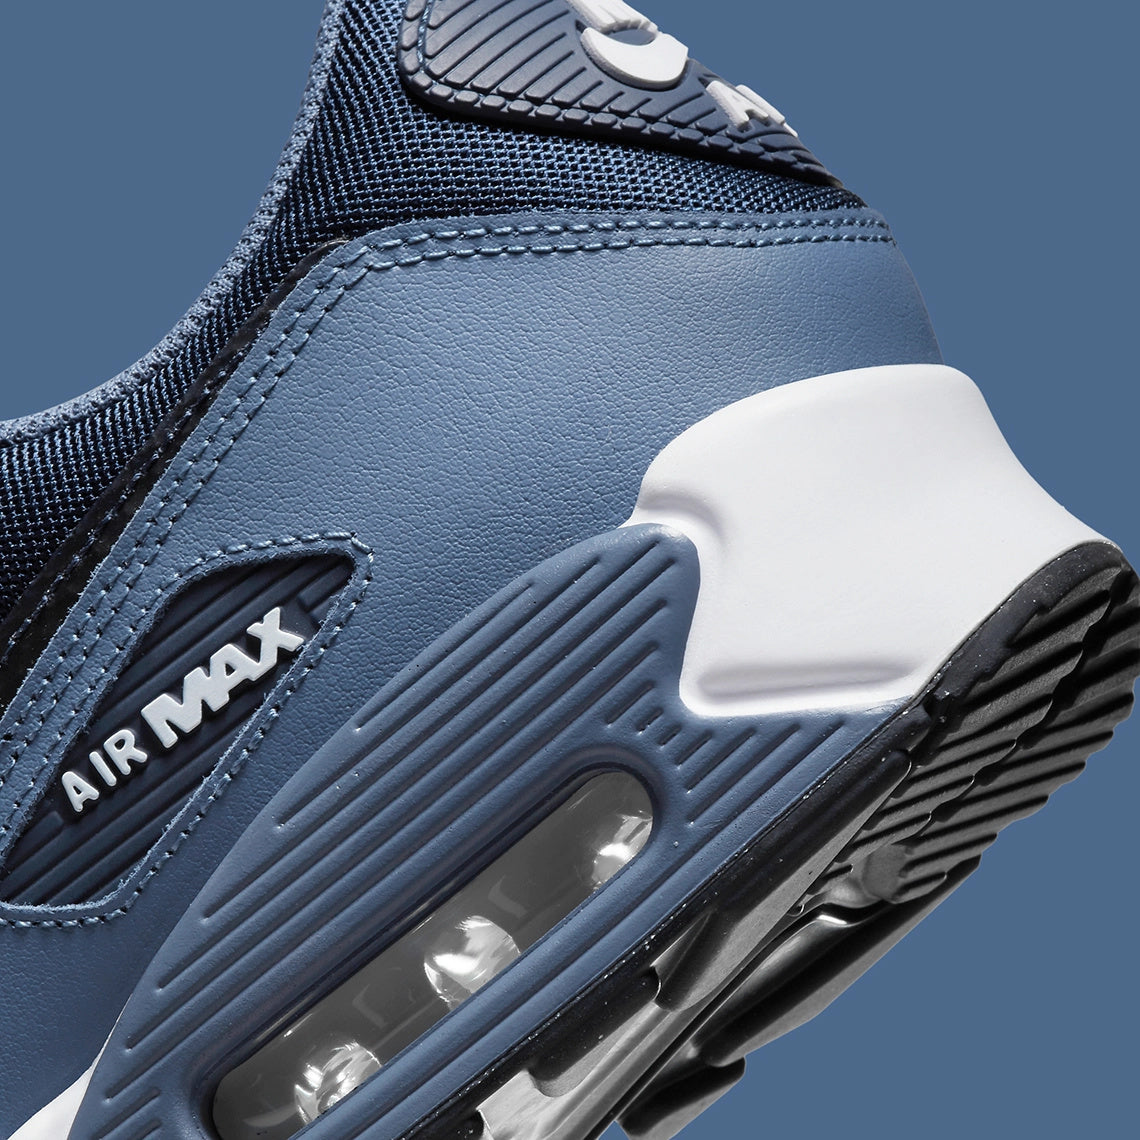 Nike Air Max 90 'Diffused Blue'